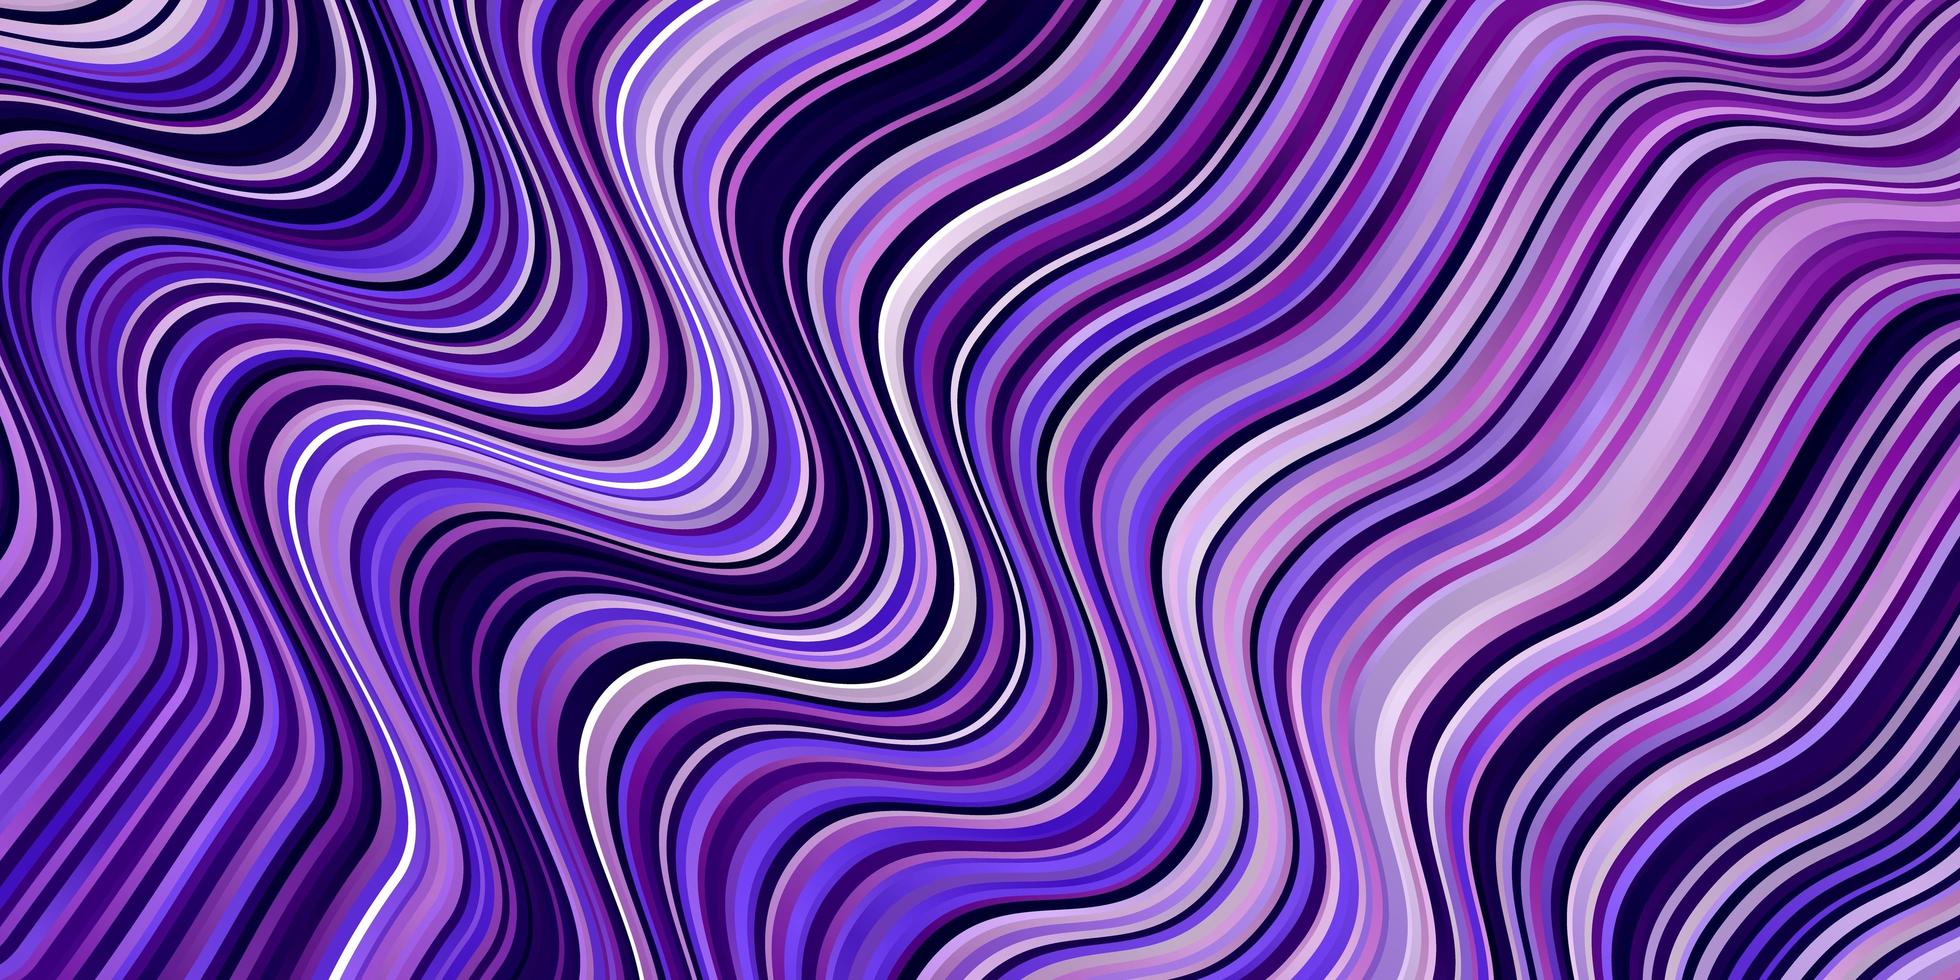 Fondo de vector púrpura claro con líneas curvas ilustración colorida con patrón de líneas curvas para folletos de negocios folletos